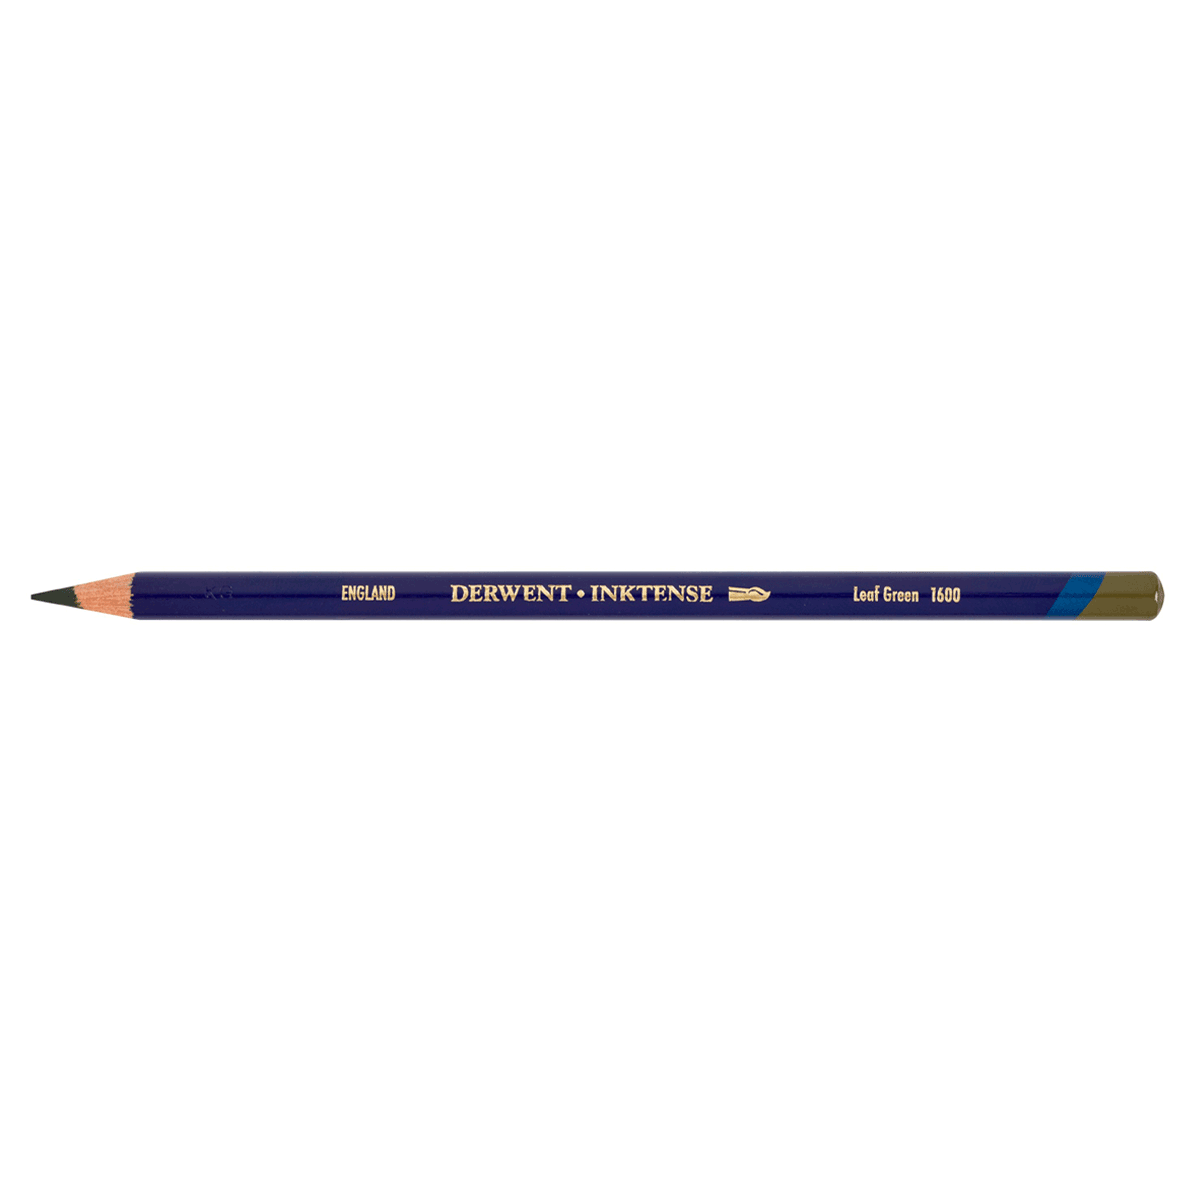 Inktense 1600 Leaf Green Pencil